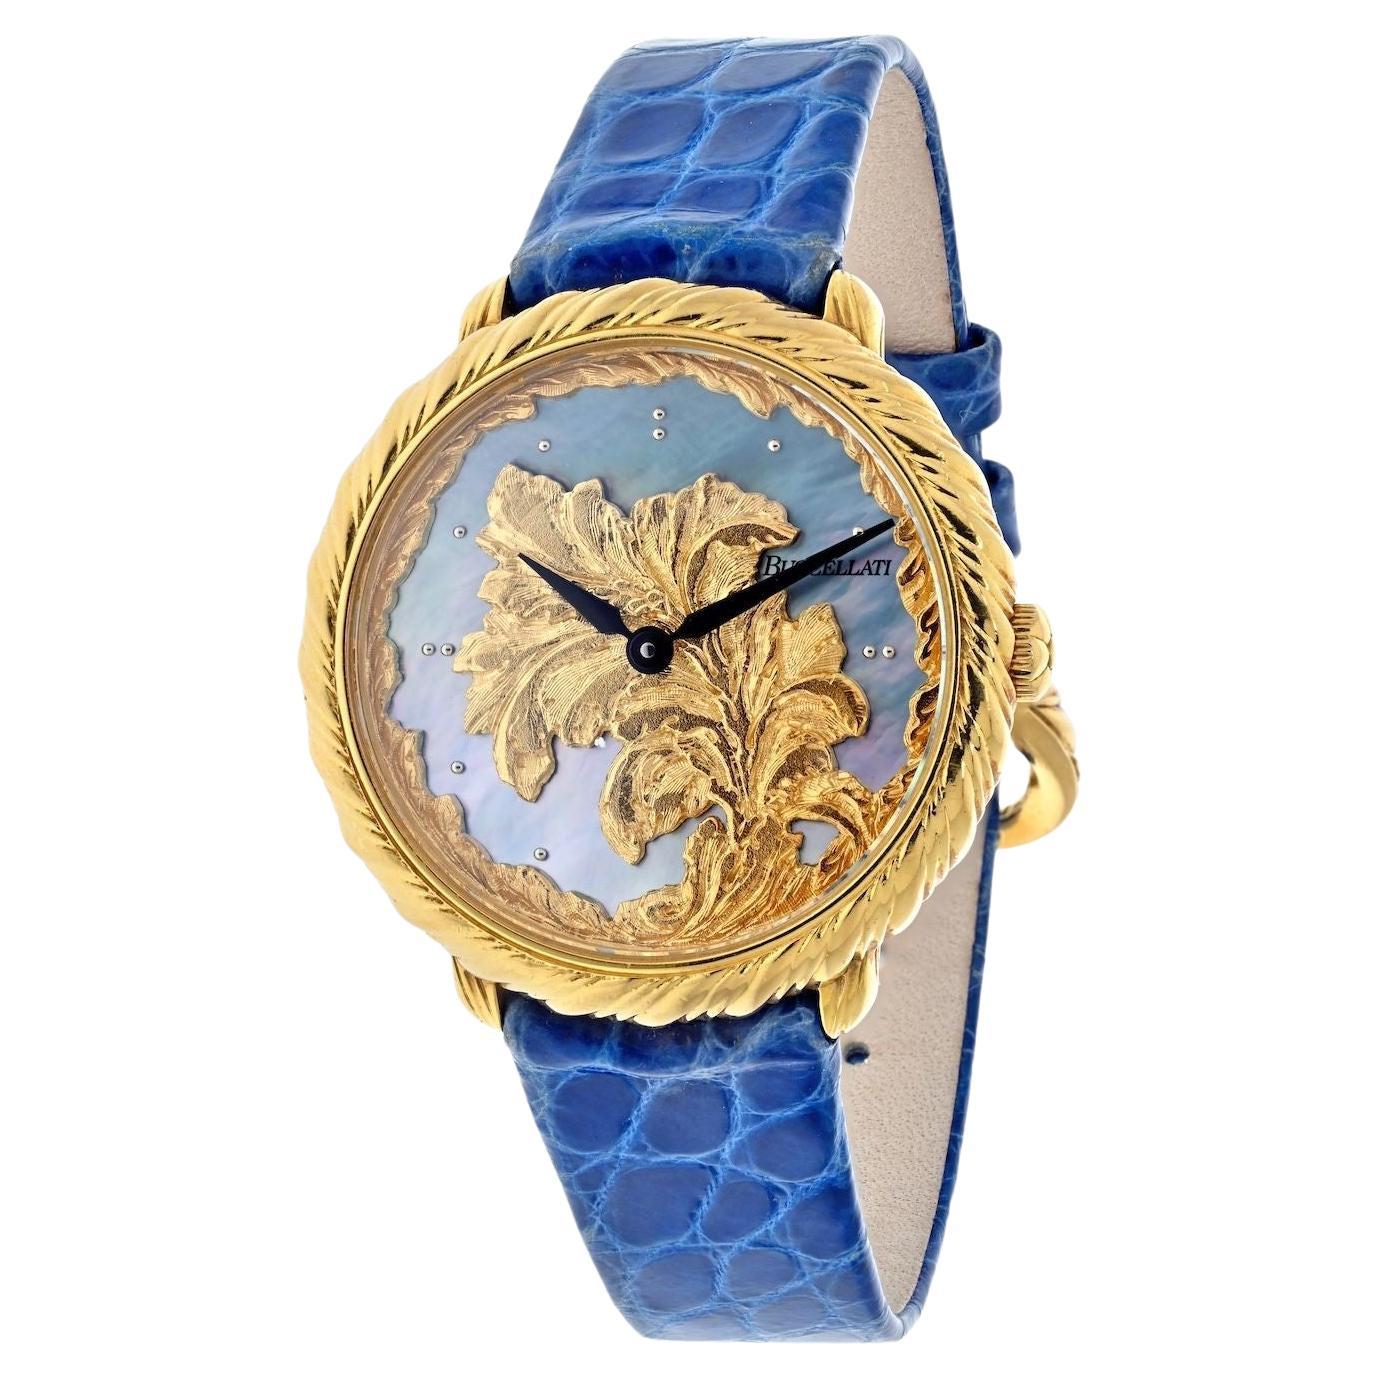 Buccellati 18K Yellow Gold Audachron Blue Leather Quartz Watch